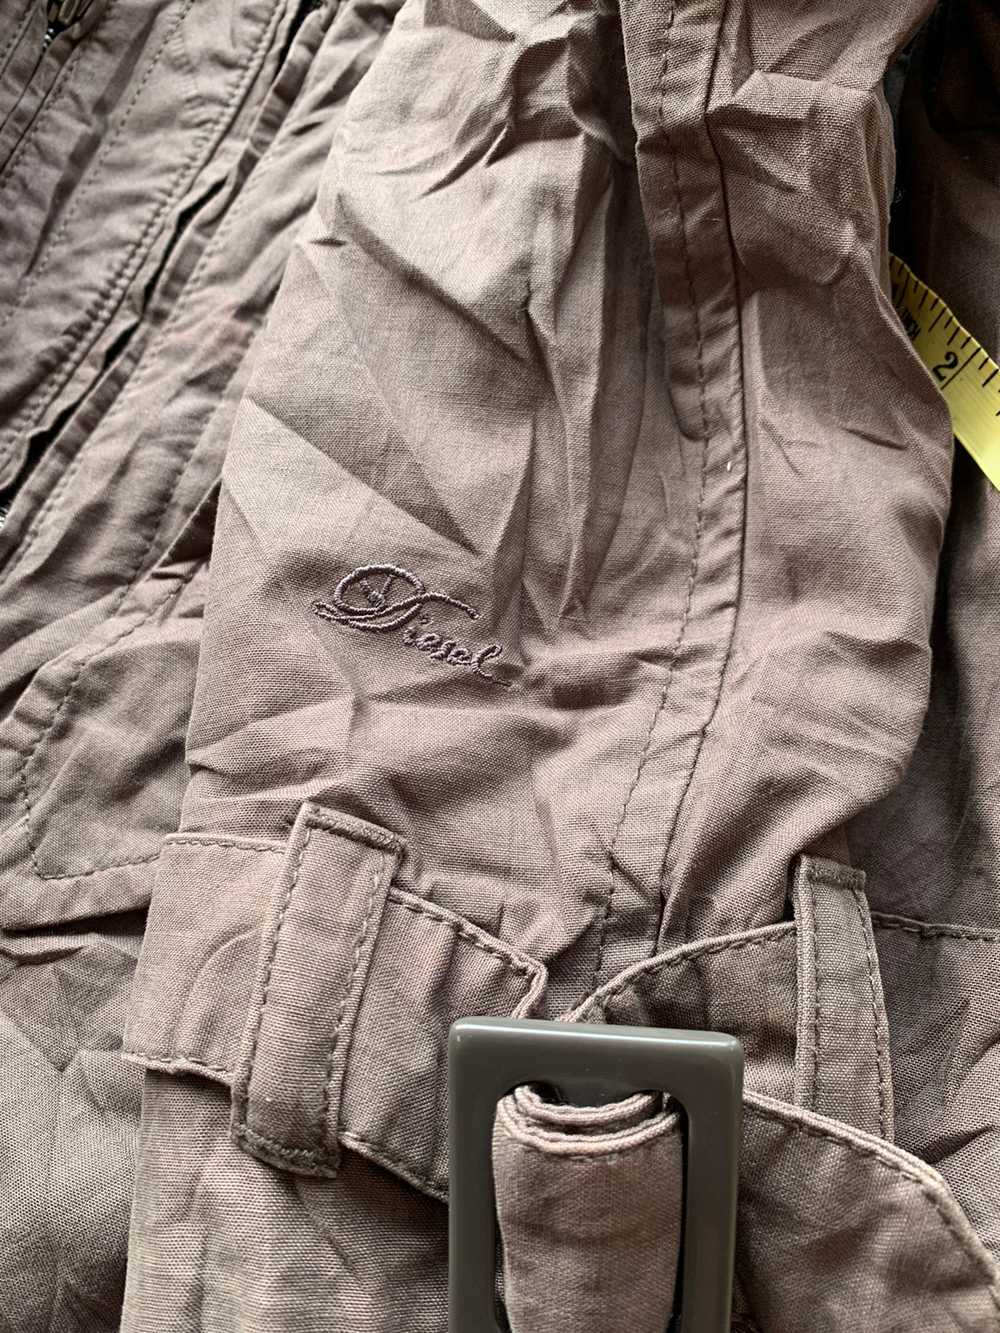 Diesel jackets full zipper nice design - image 5